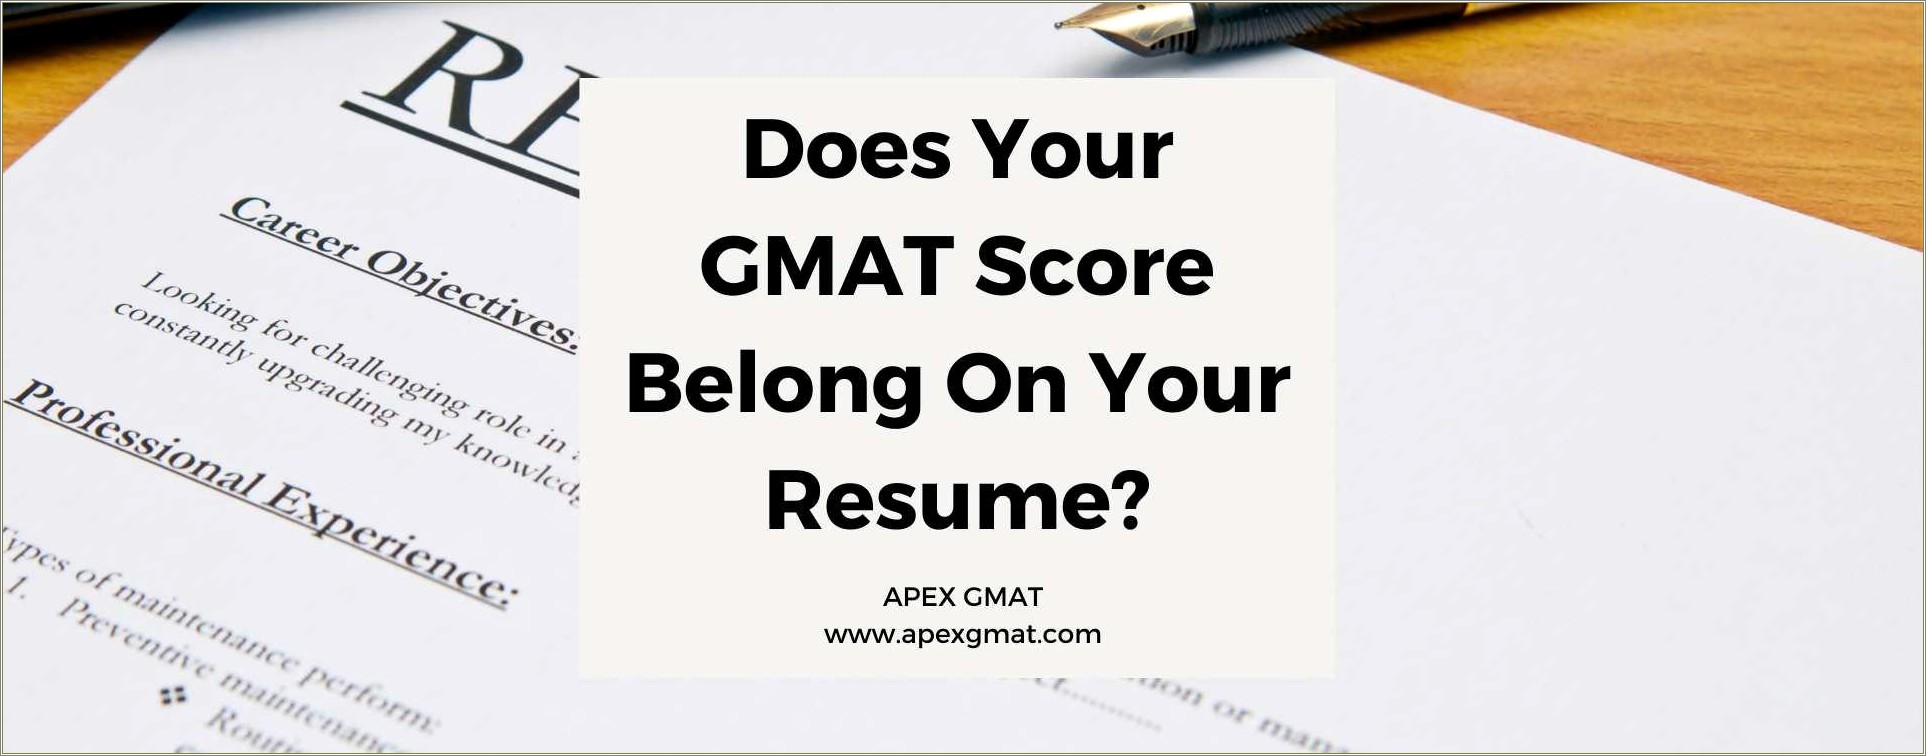 Good Enough Gmat Score For Resume